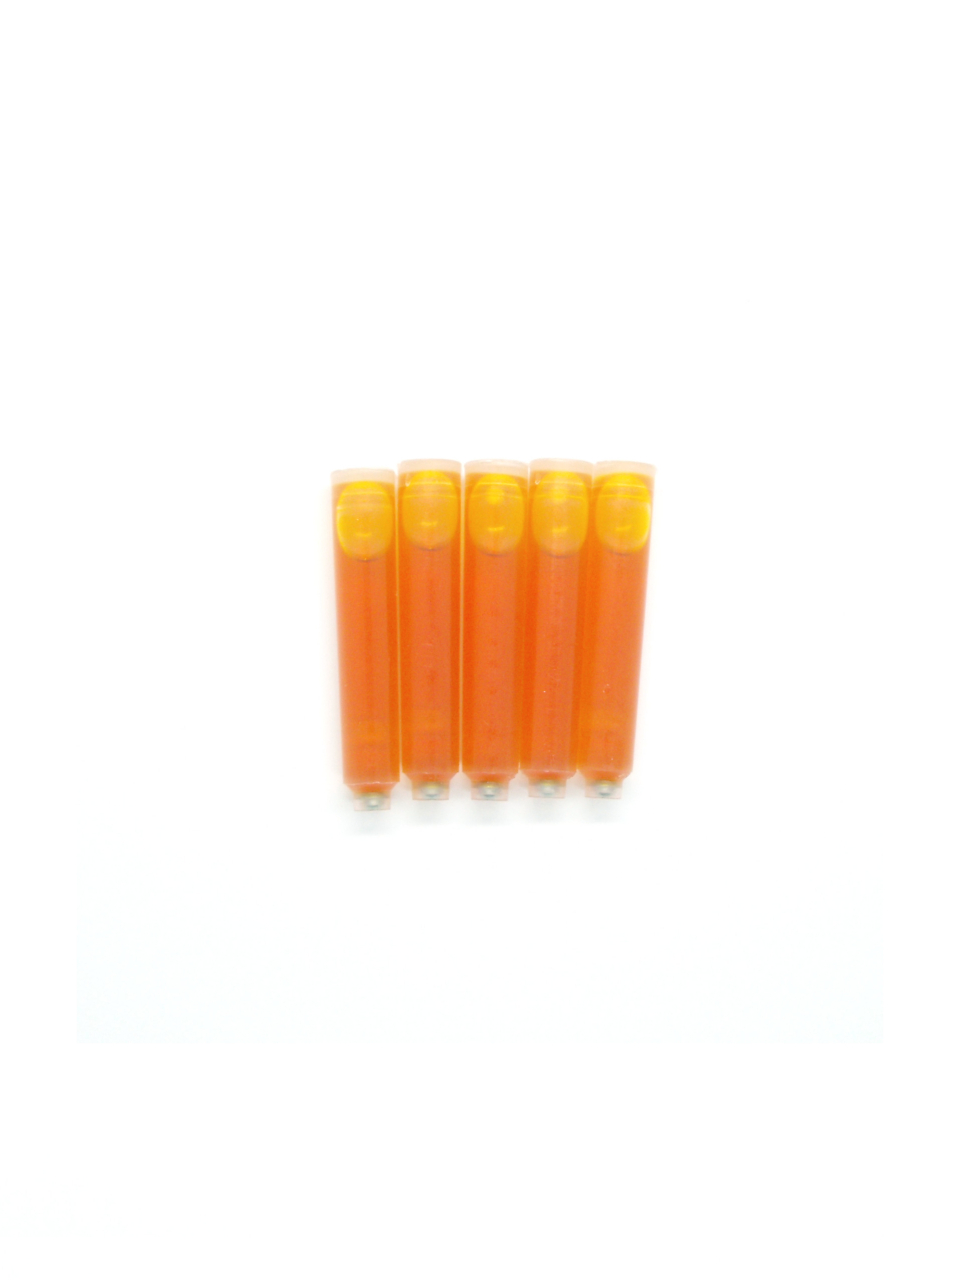 PenConverter Ink Cartridges For Pelikan Fountain Pens (Yellow)